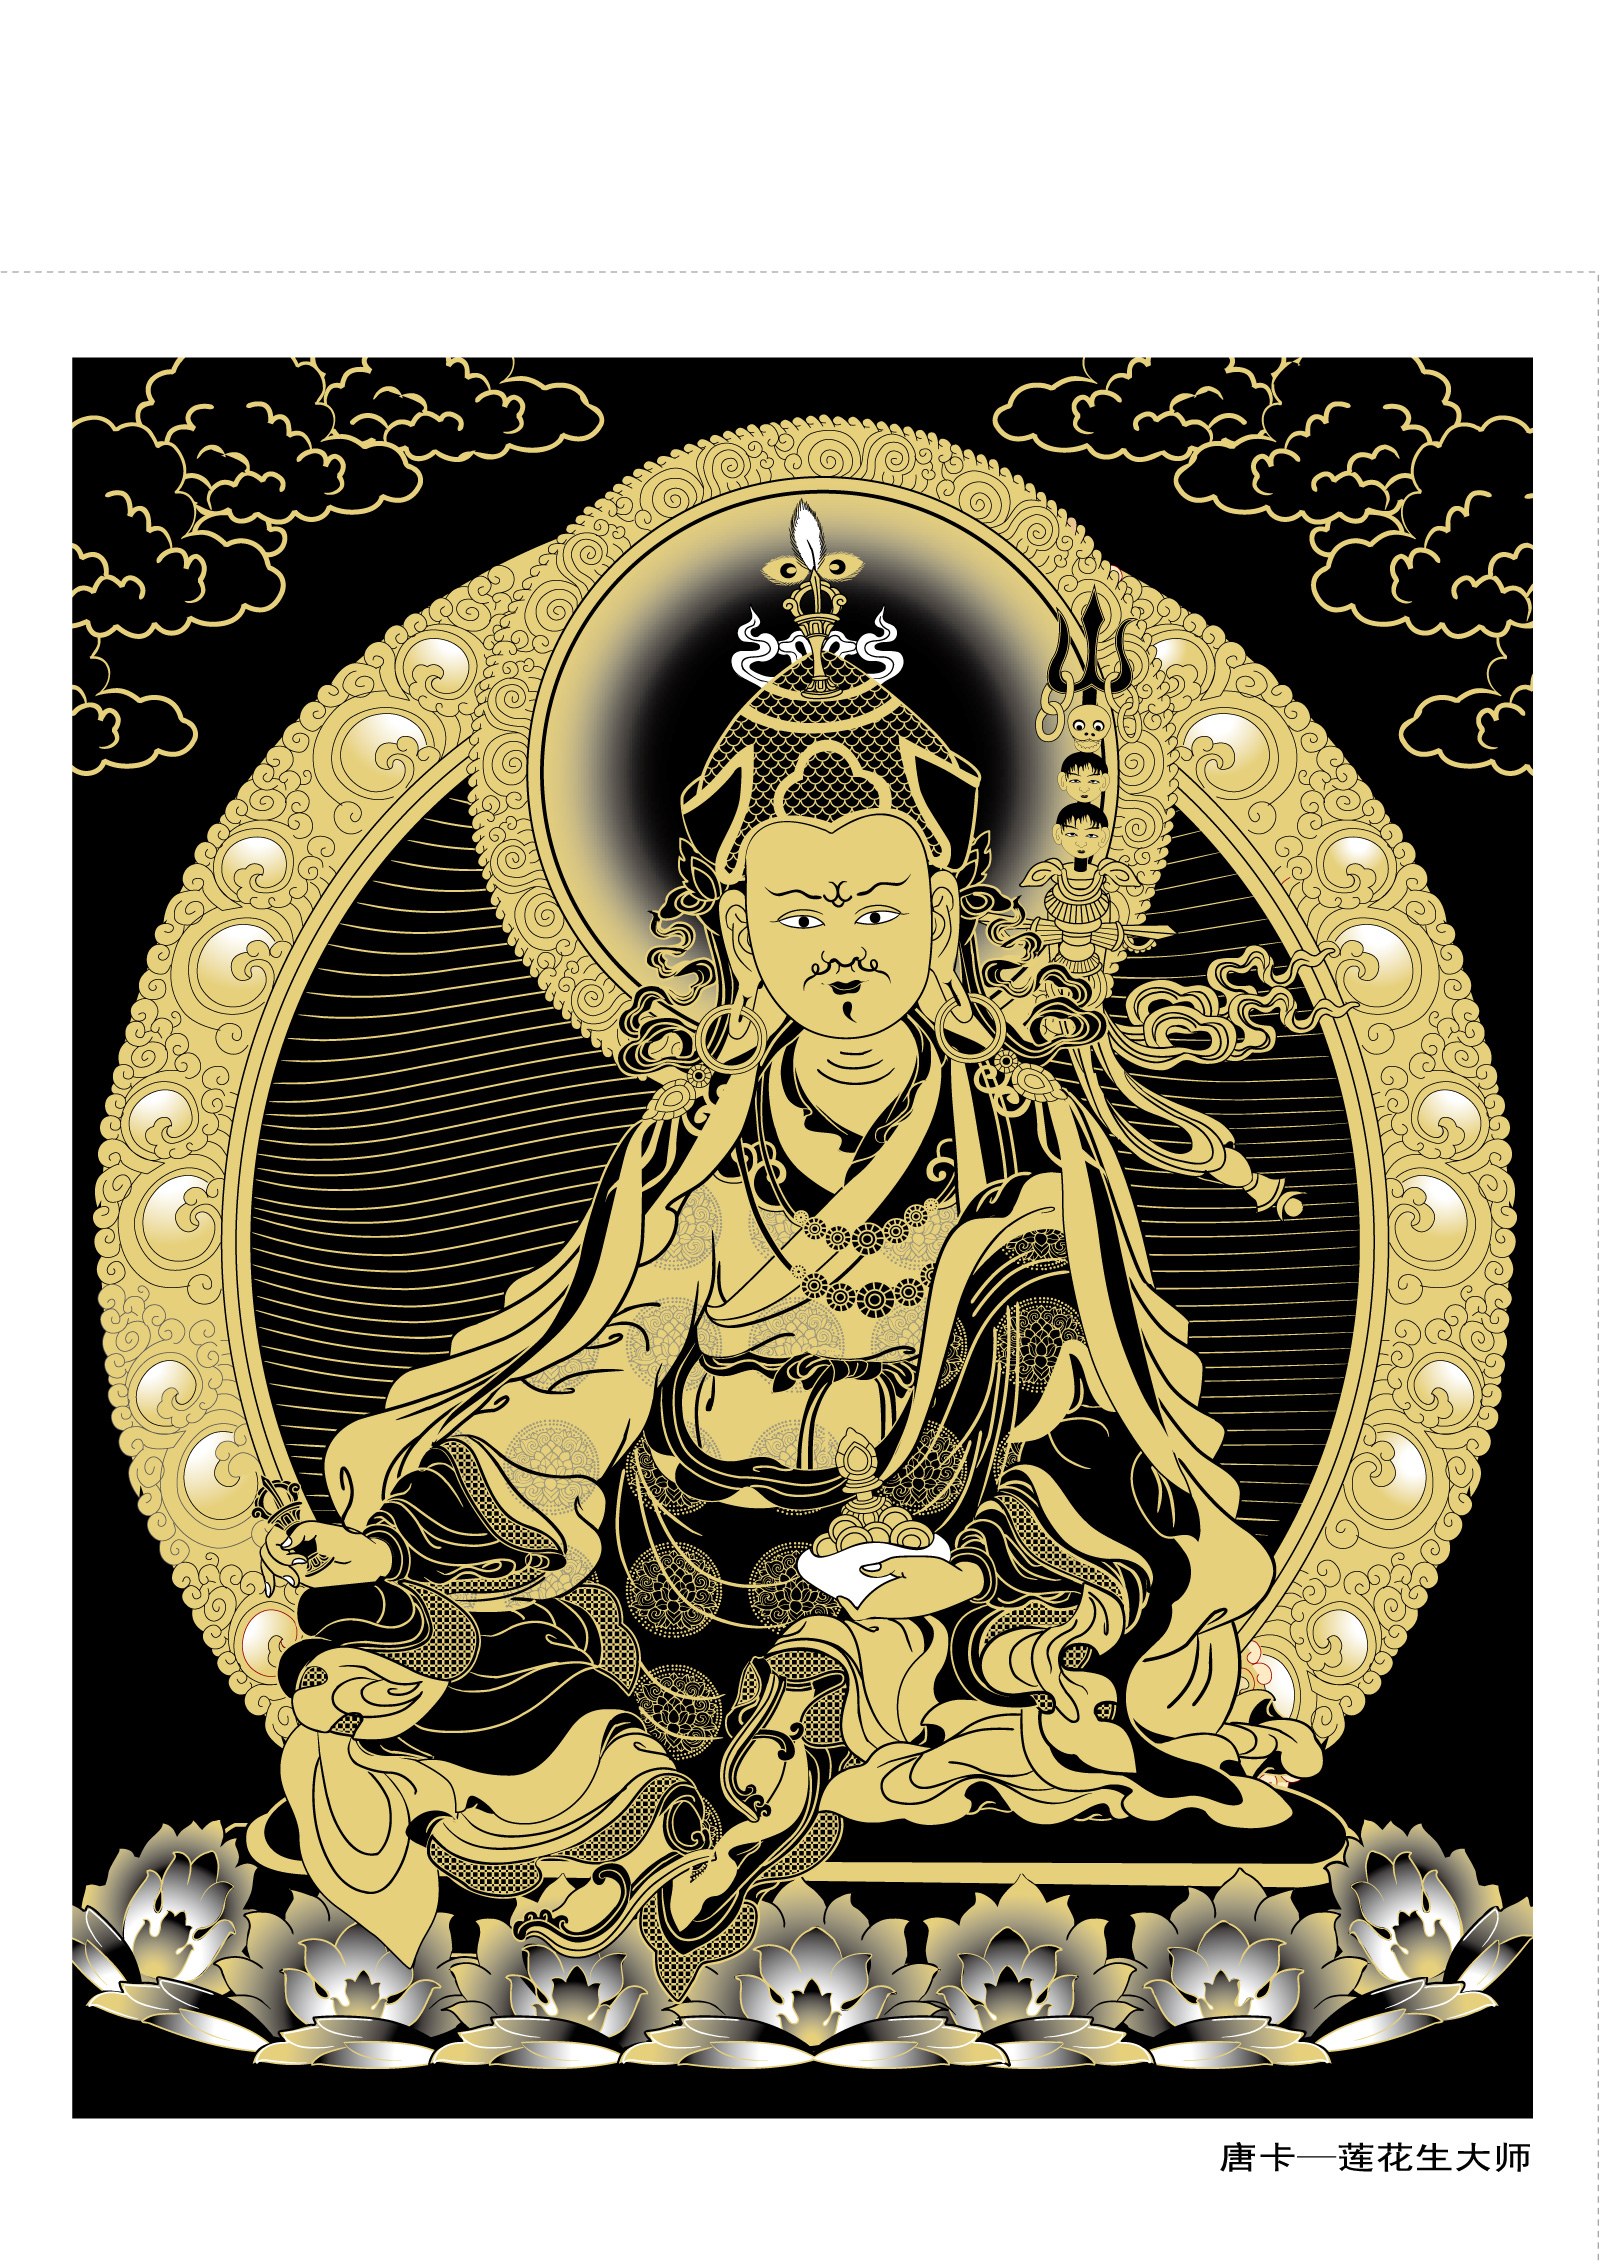 Chinese Tibetan Buddhism traditional figure lotus peanut master vector material - Illustrations Vectors AI ESP Free Download